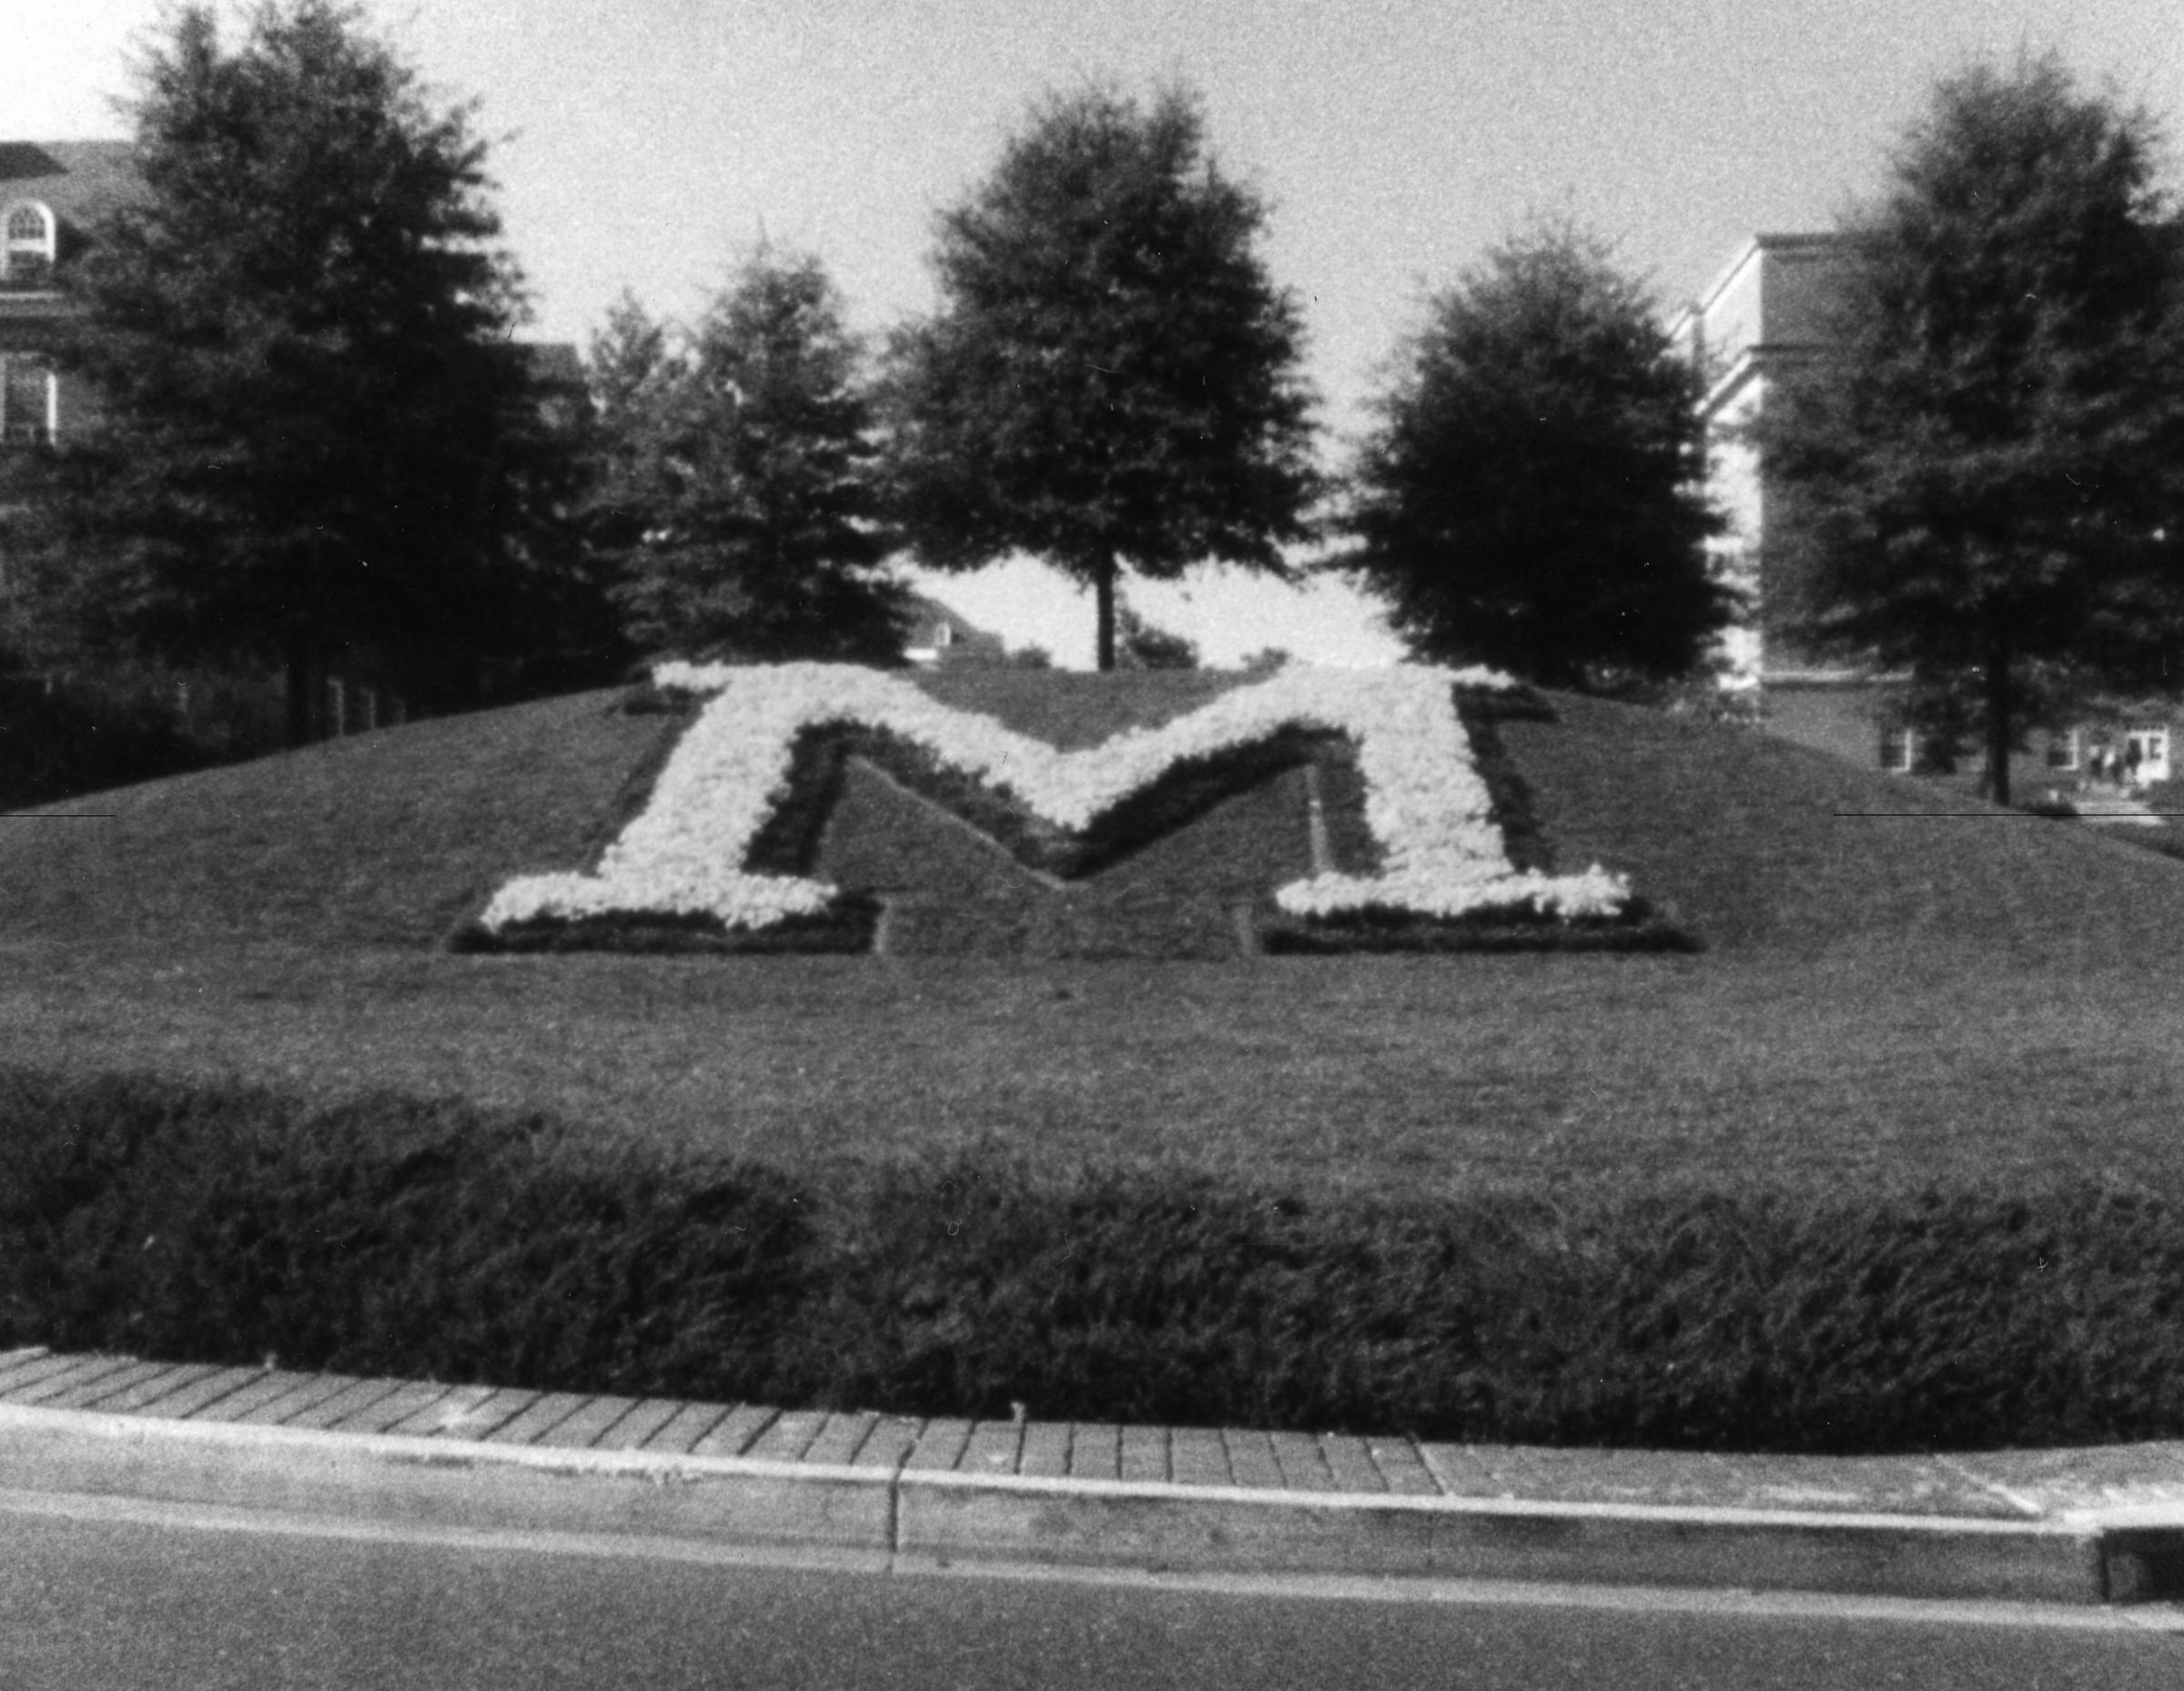 The Big "M" on UMD's Campus Drive (b&w version)